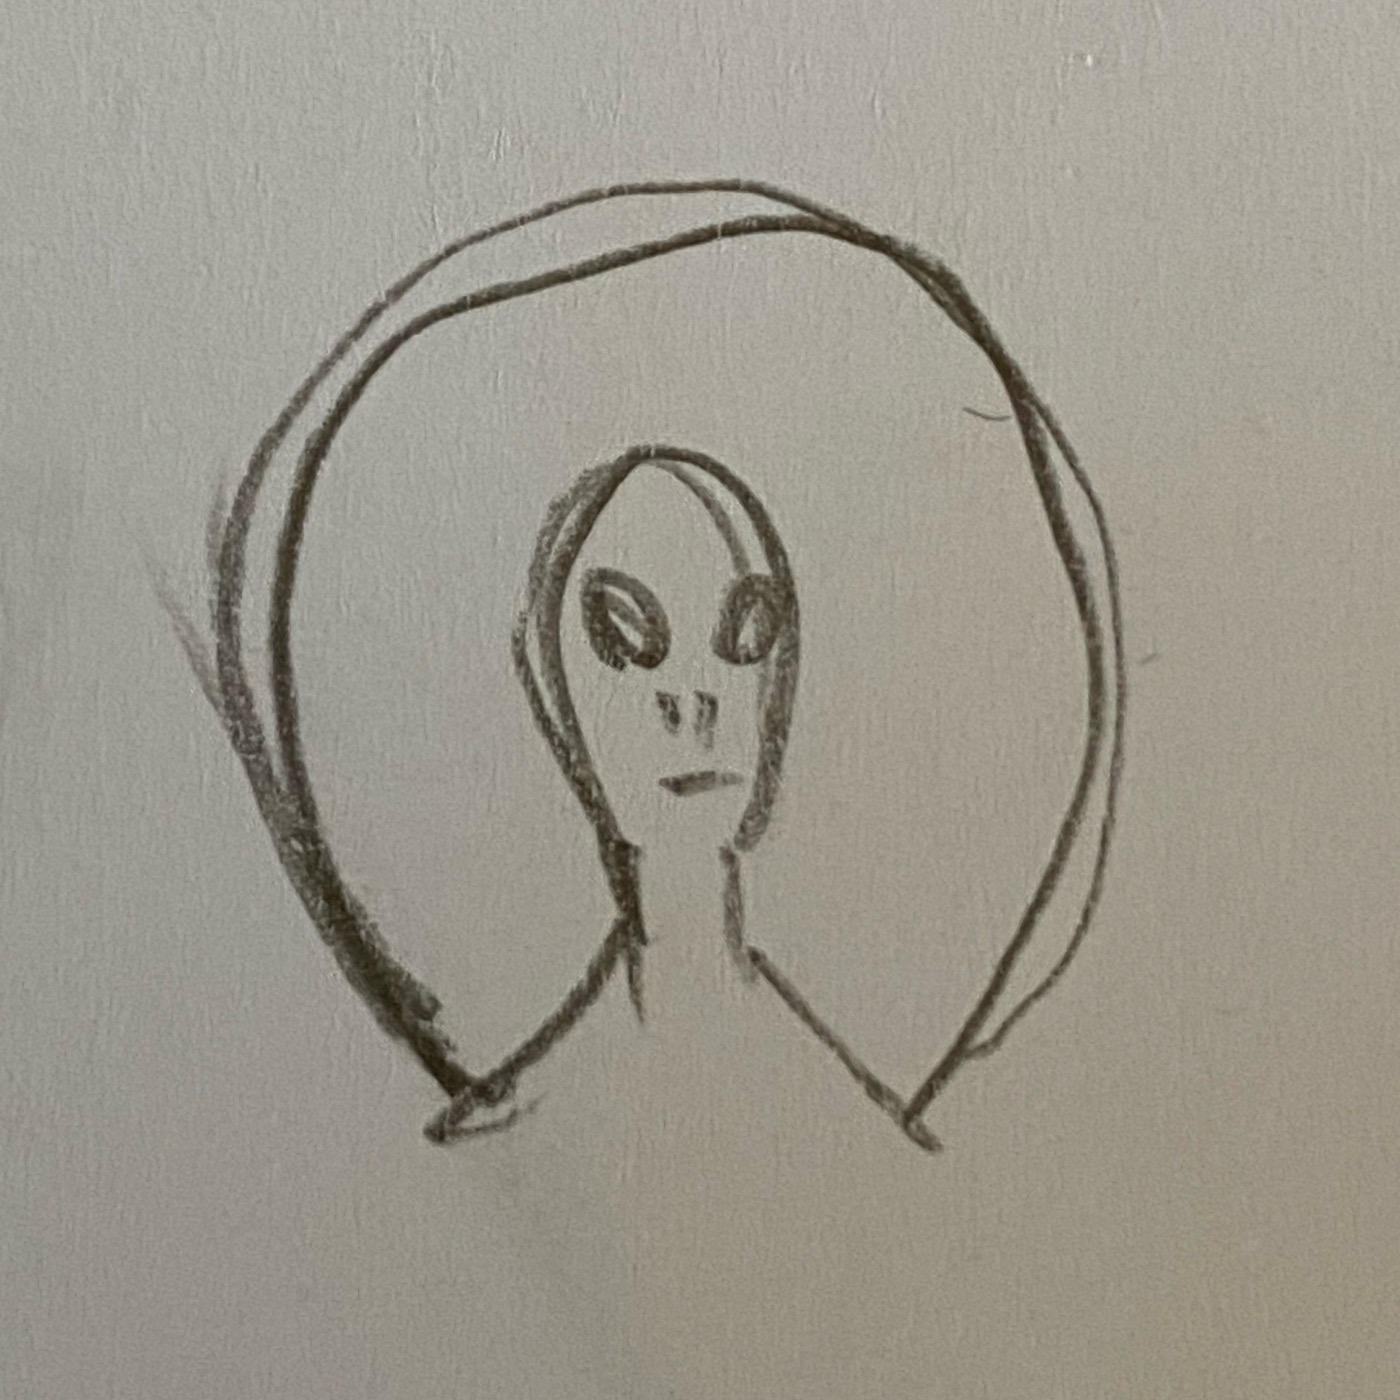 Pencil sketch of an alien face